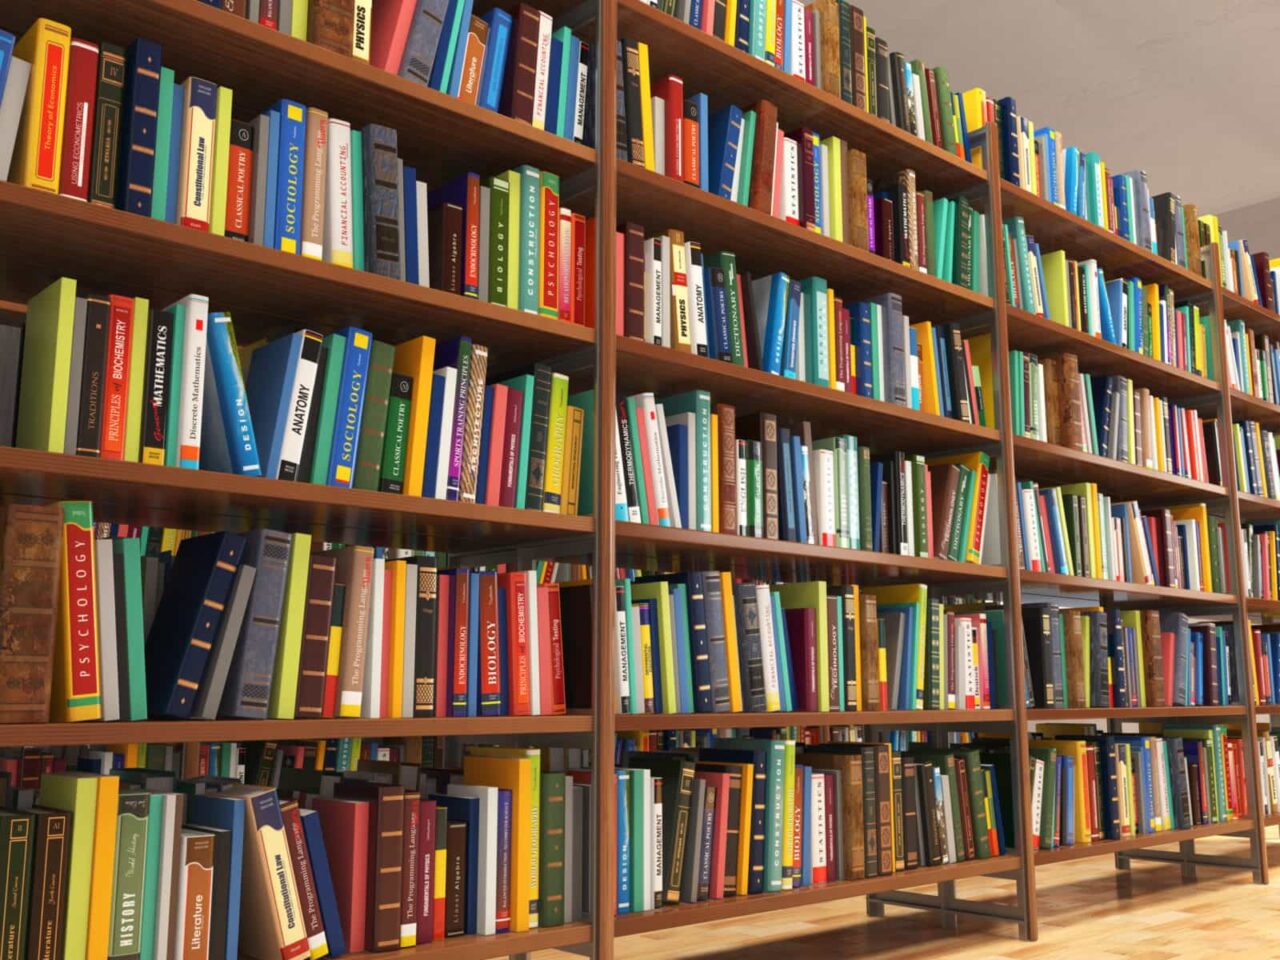 Library stacks of books and bookshelf.